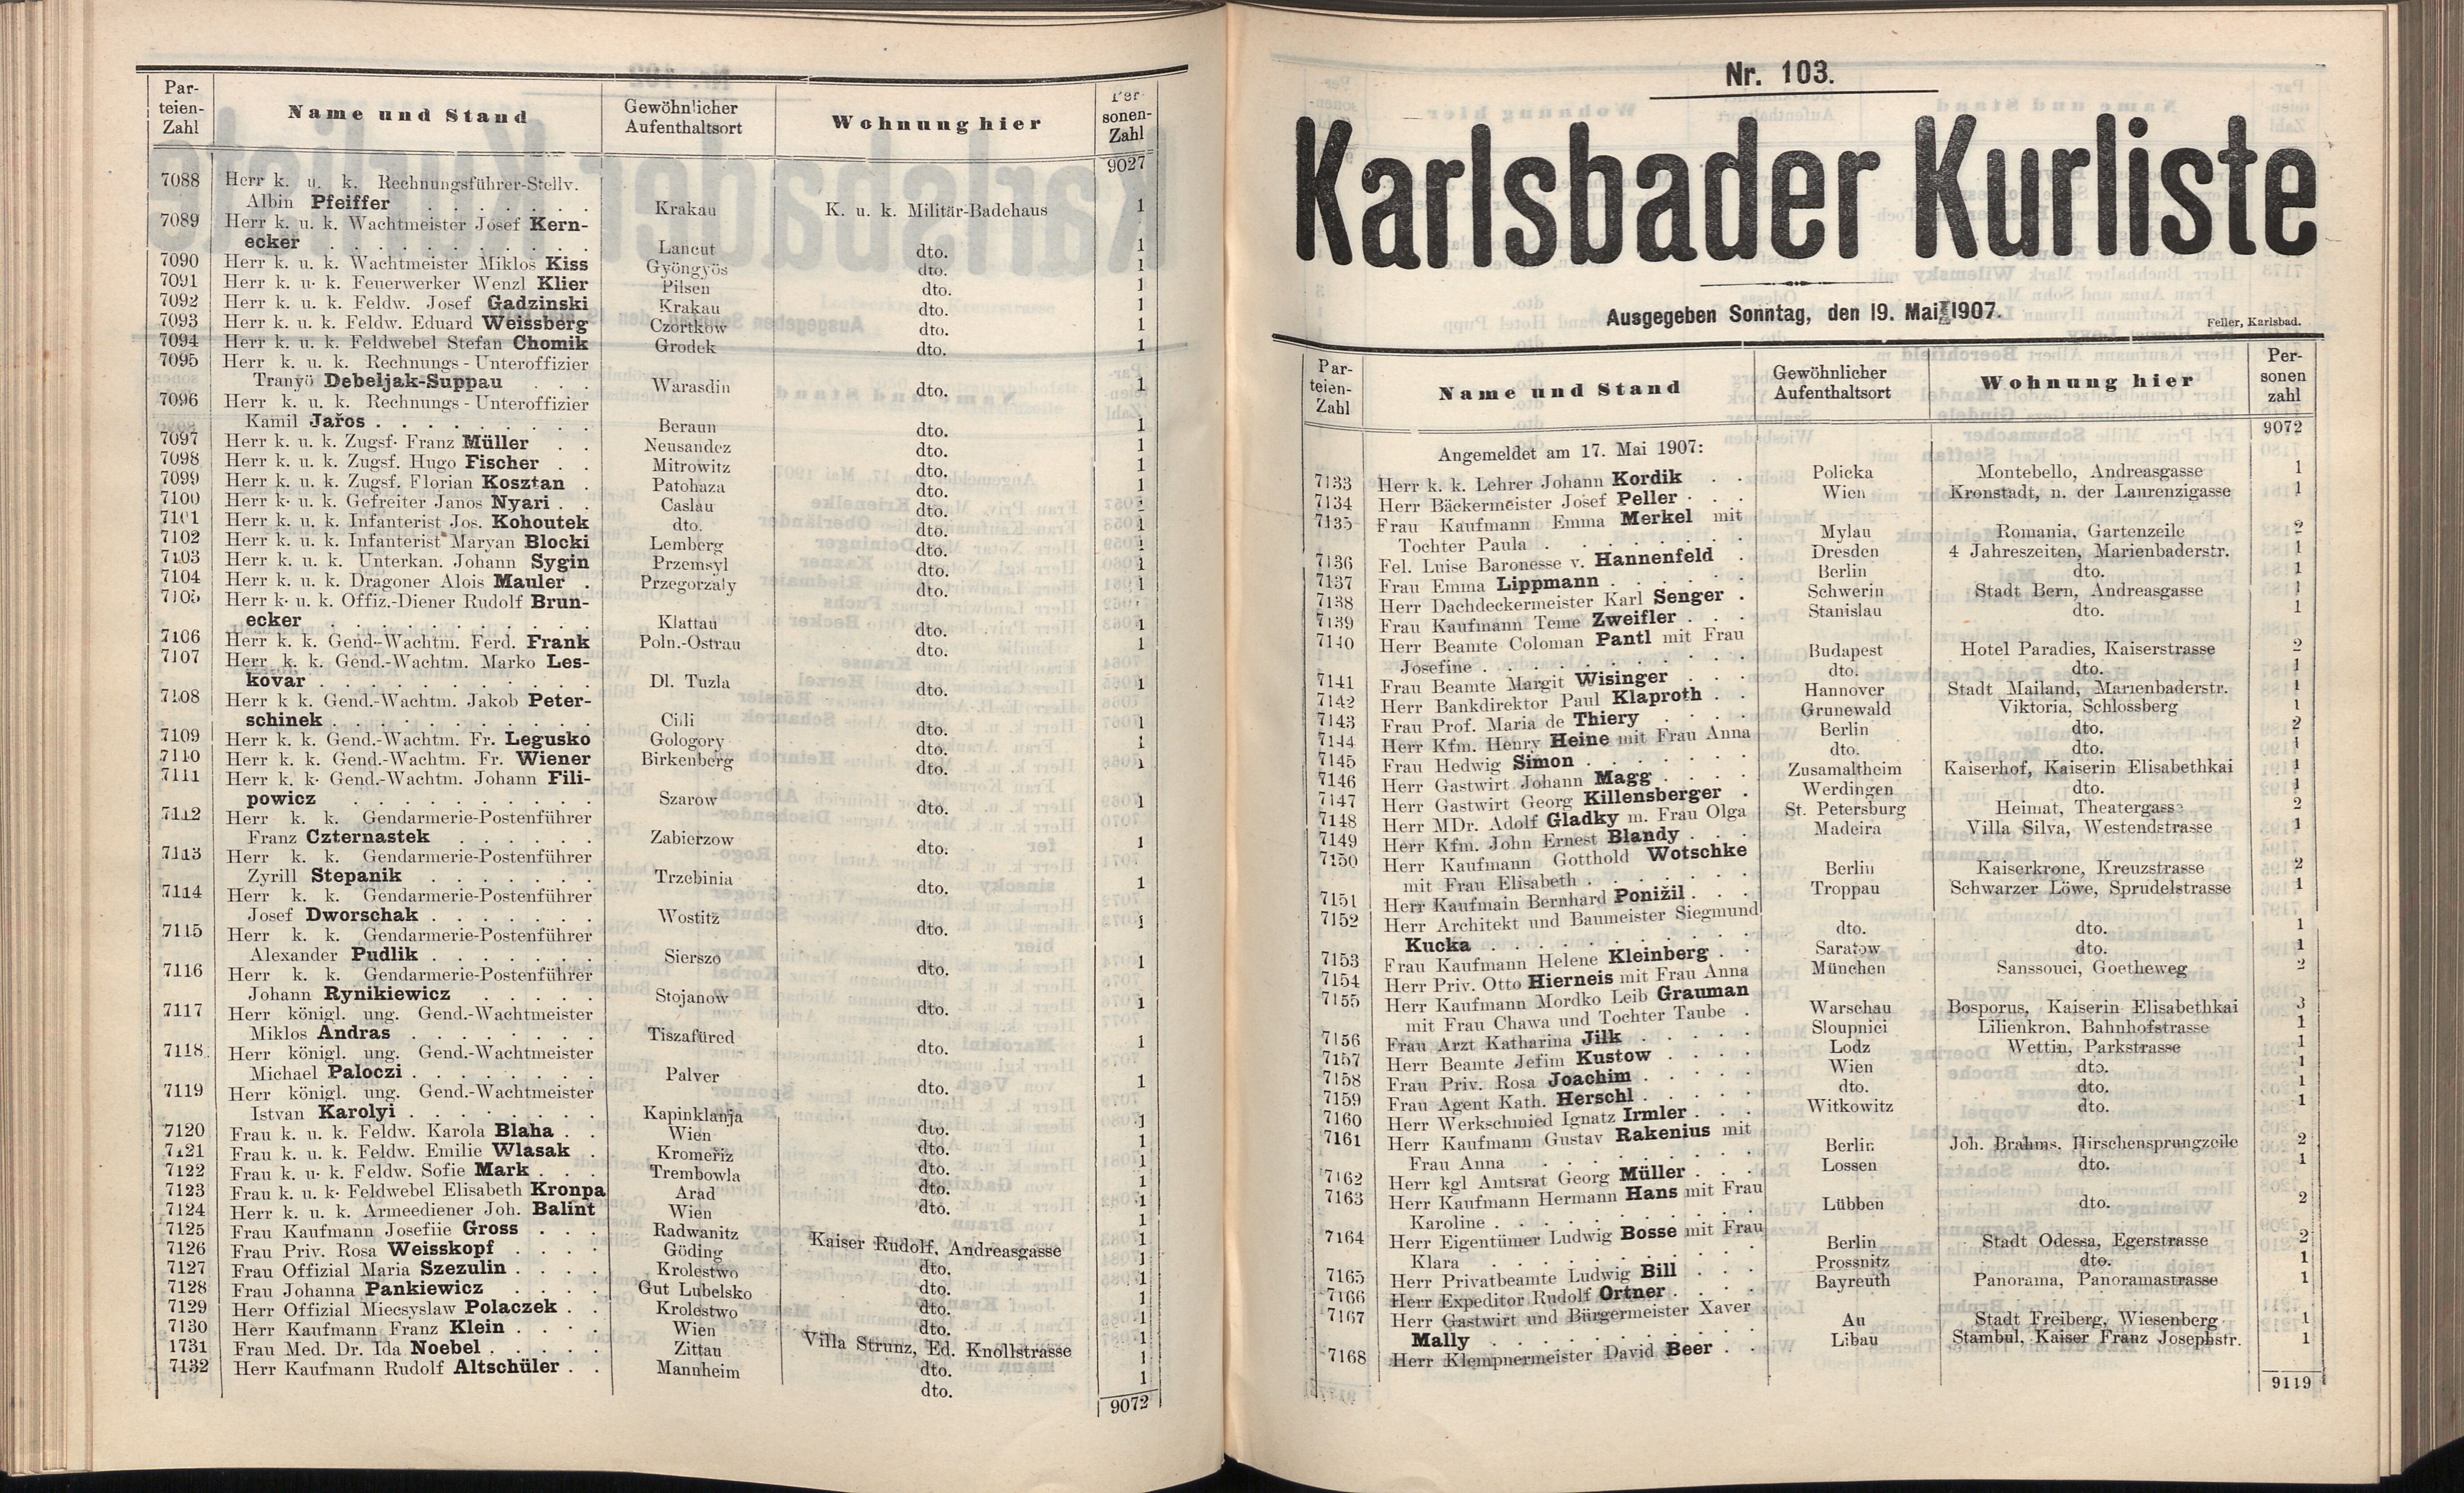 216. soap-kv_knihovna_karlsbader-kurliste-1907_2170